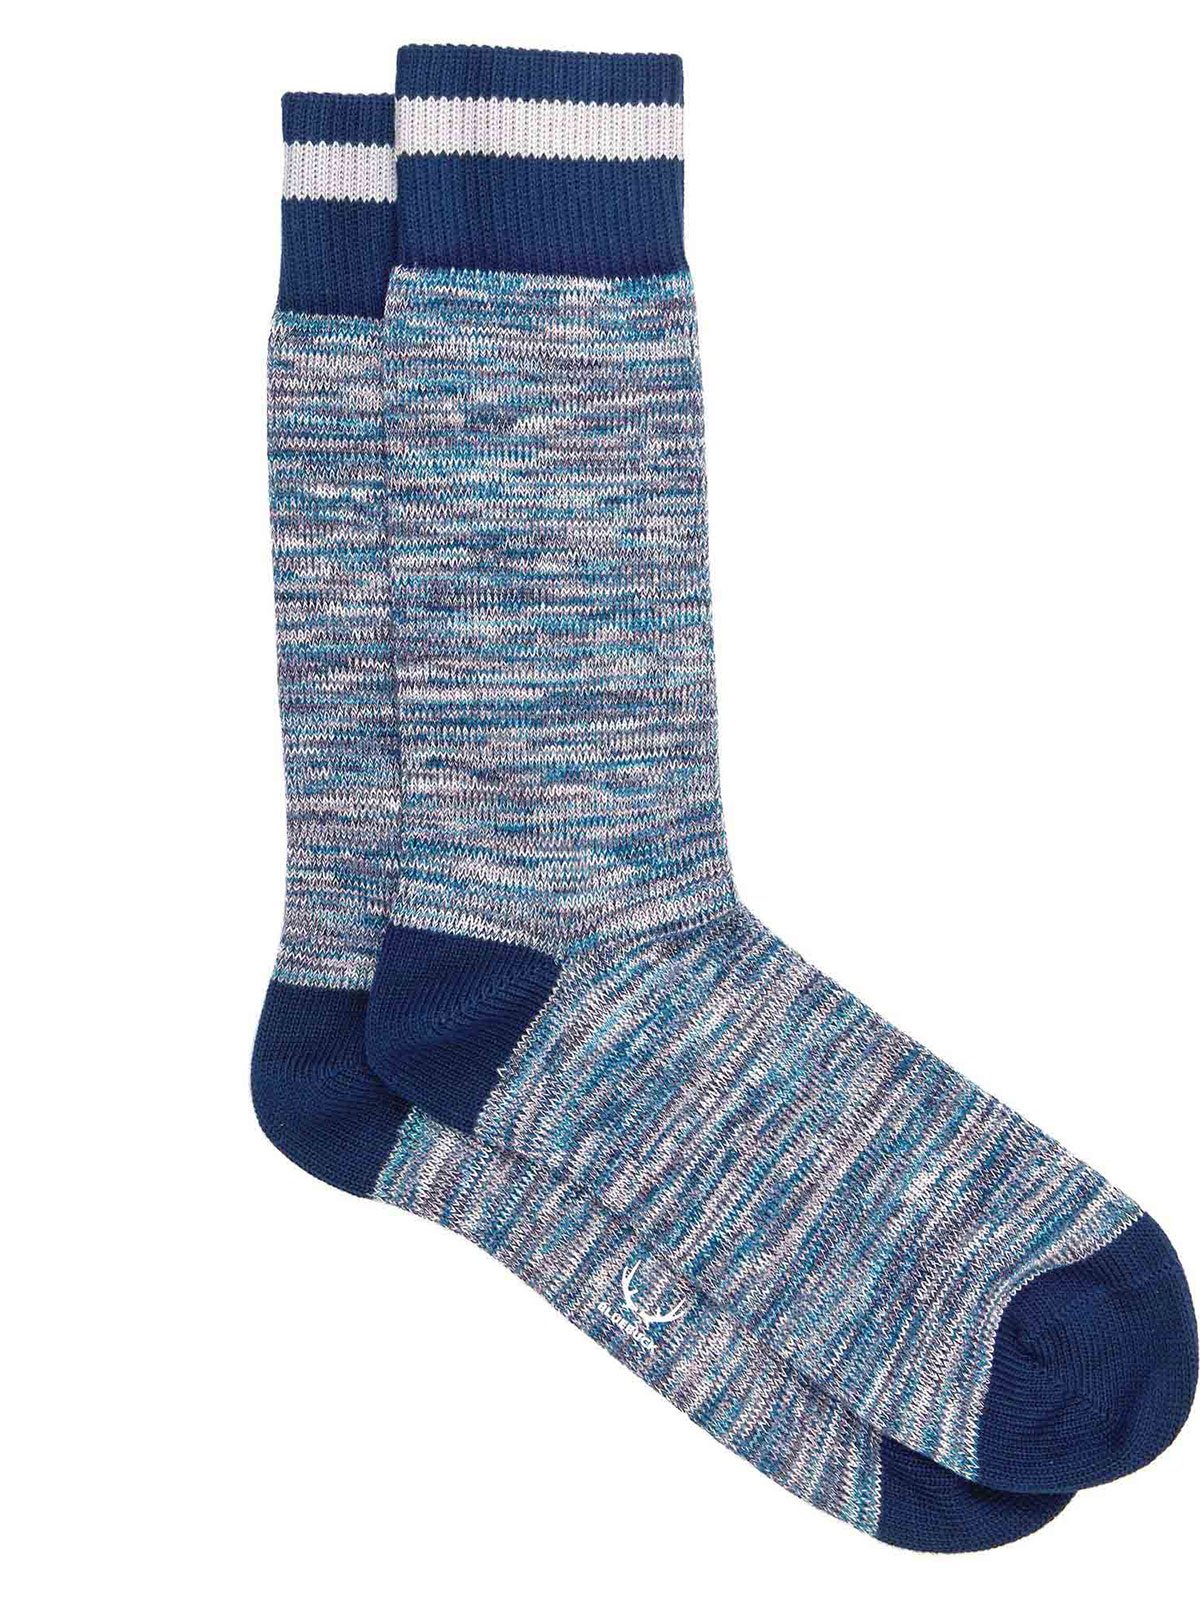 Nautical Socks | Blue/Grey